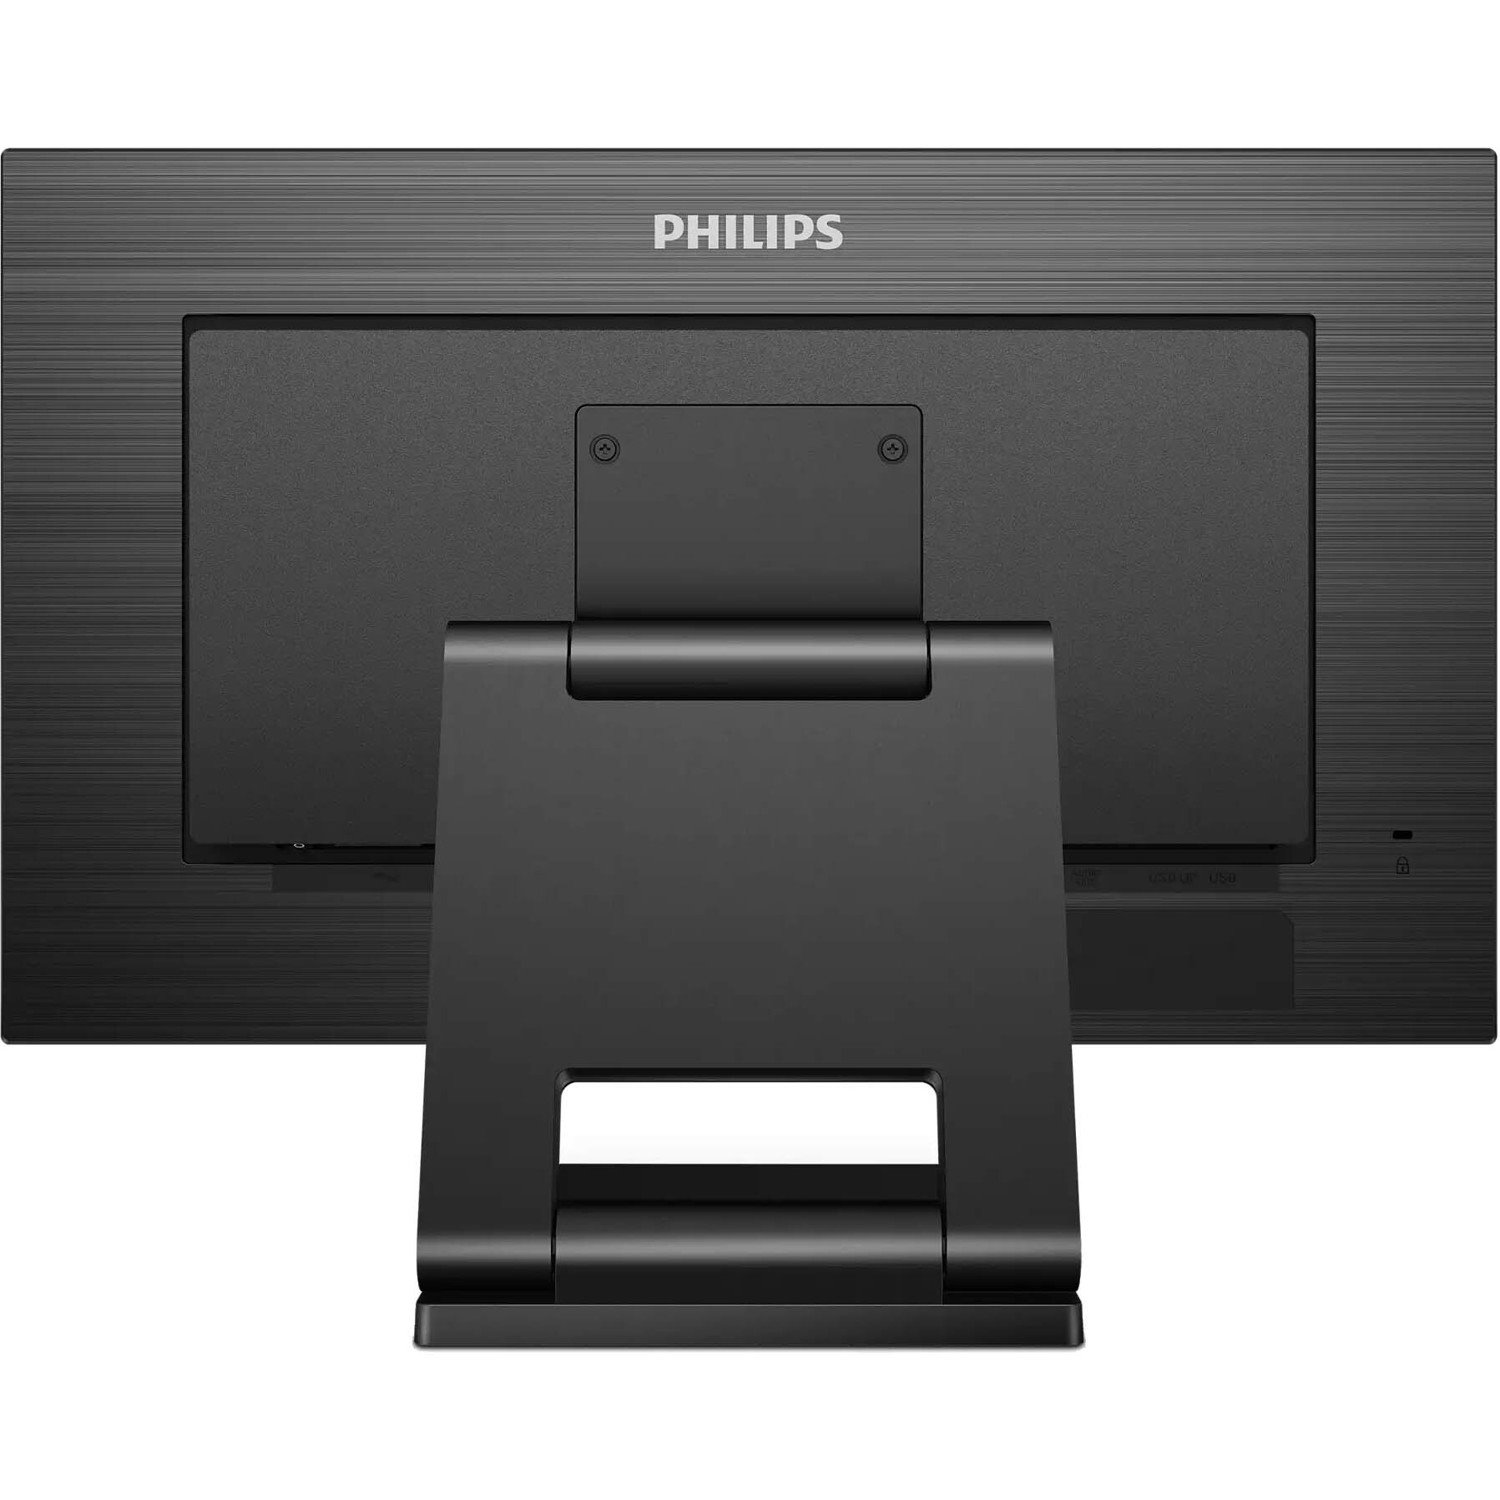 Philips 242B1TC 23.8" LED Touchscreen Monitor - 16:9 - 4 ms GTG